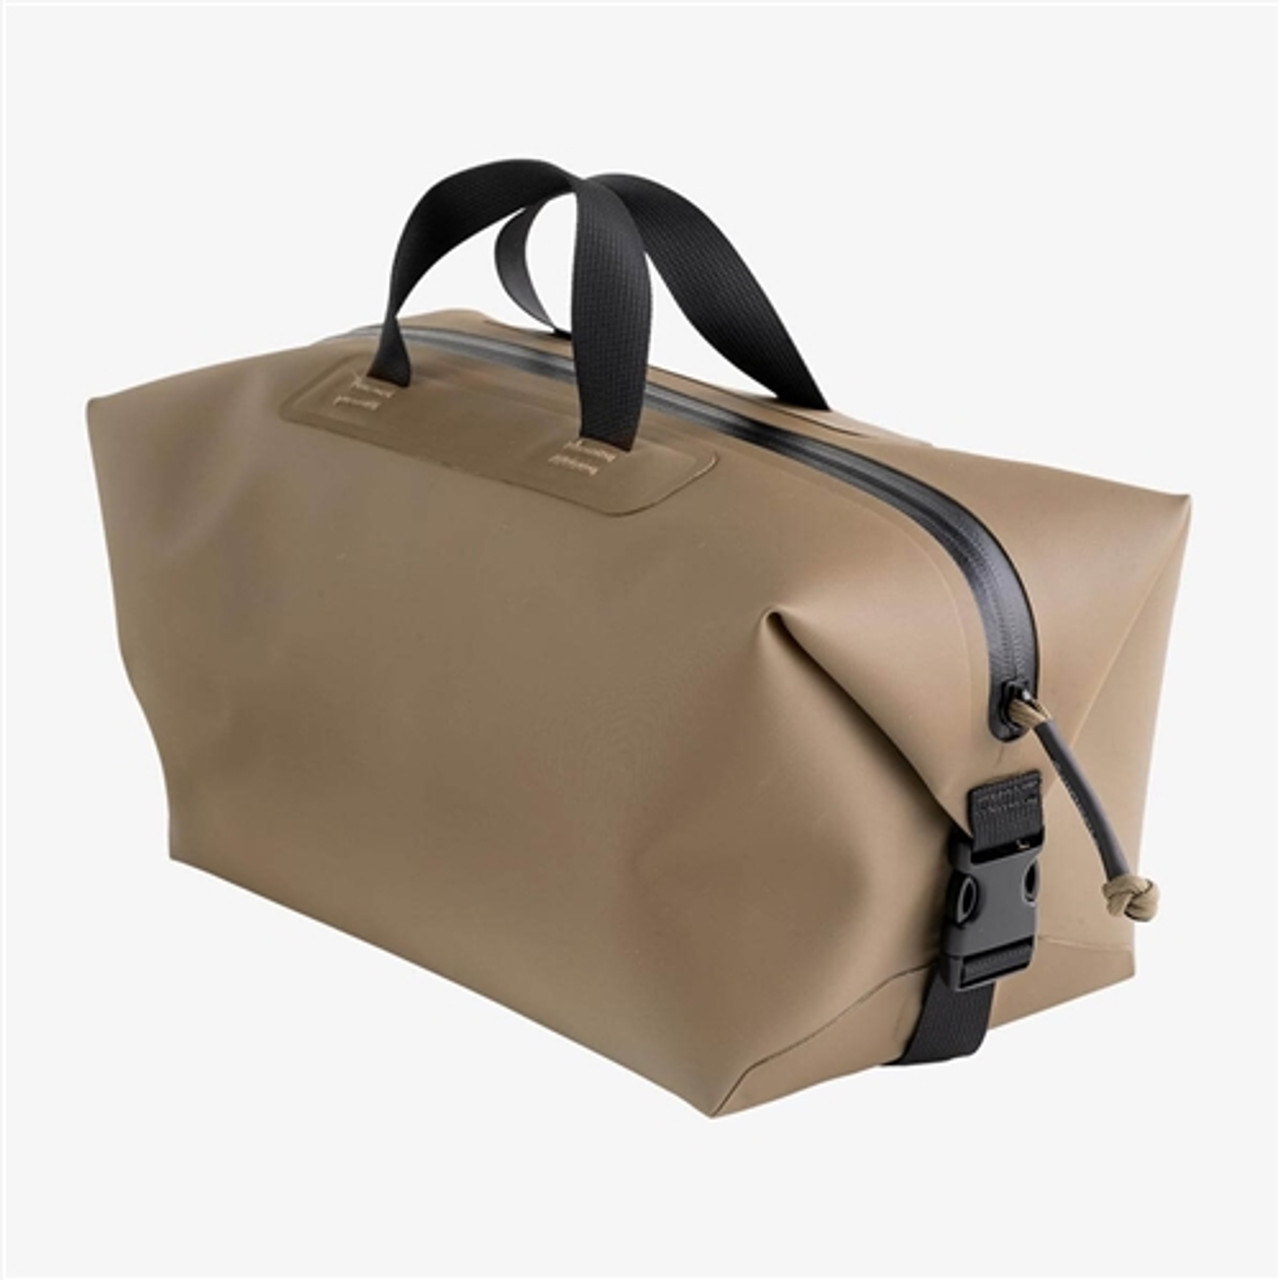 Magpul DAKA Takeout Large Kit Bag